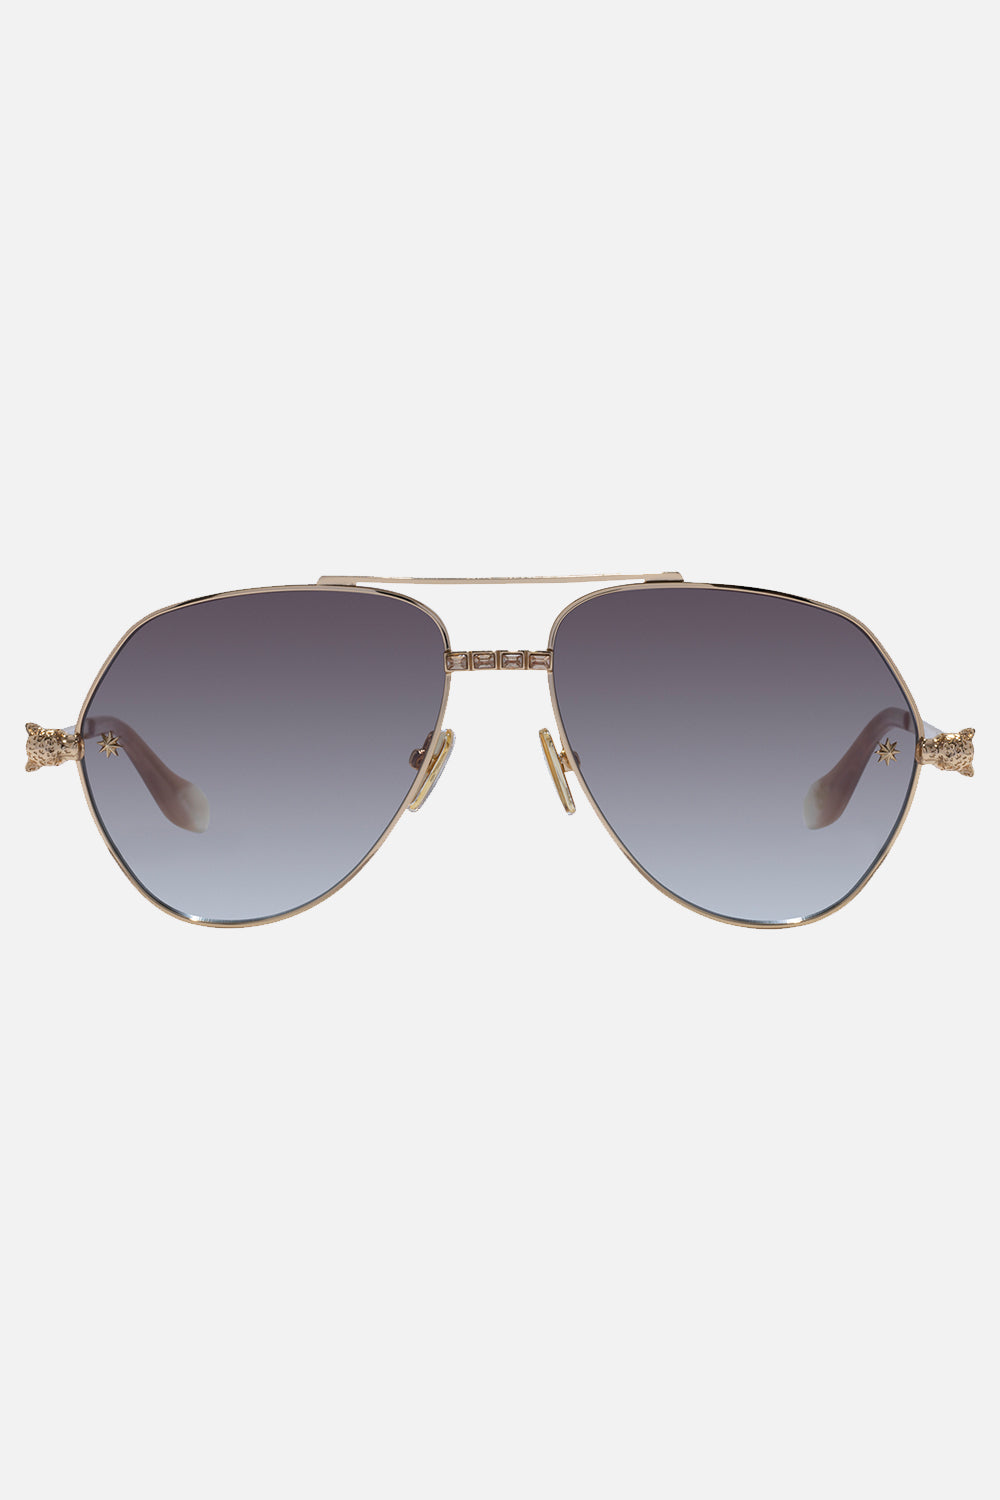 CAMILLA designer sunglasses in Nothing In Moderation 